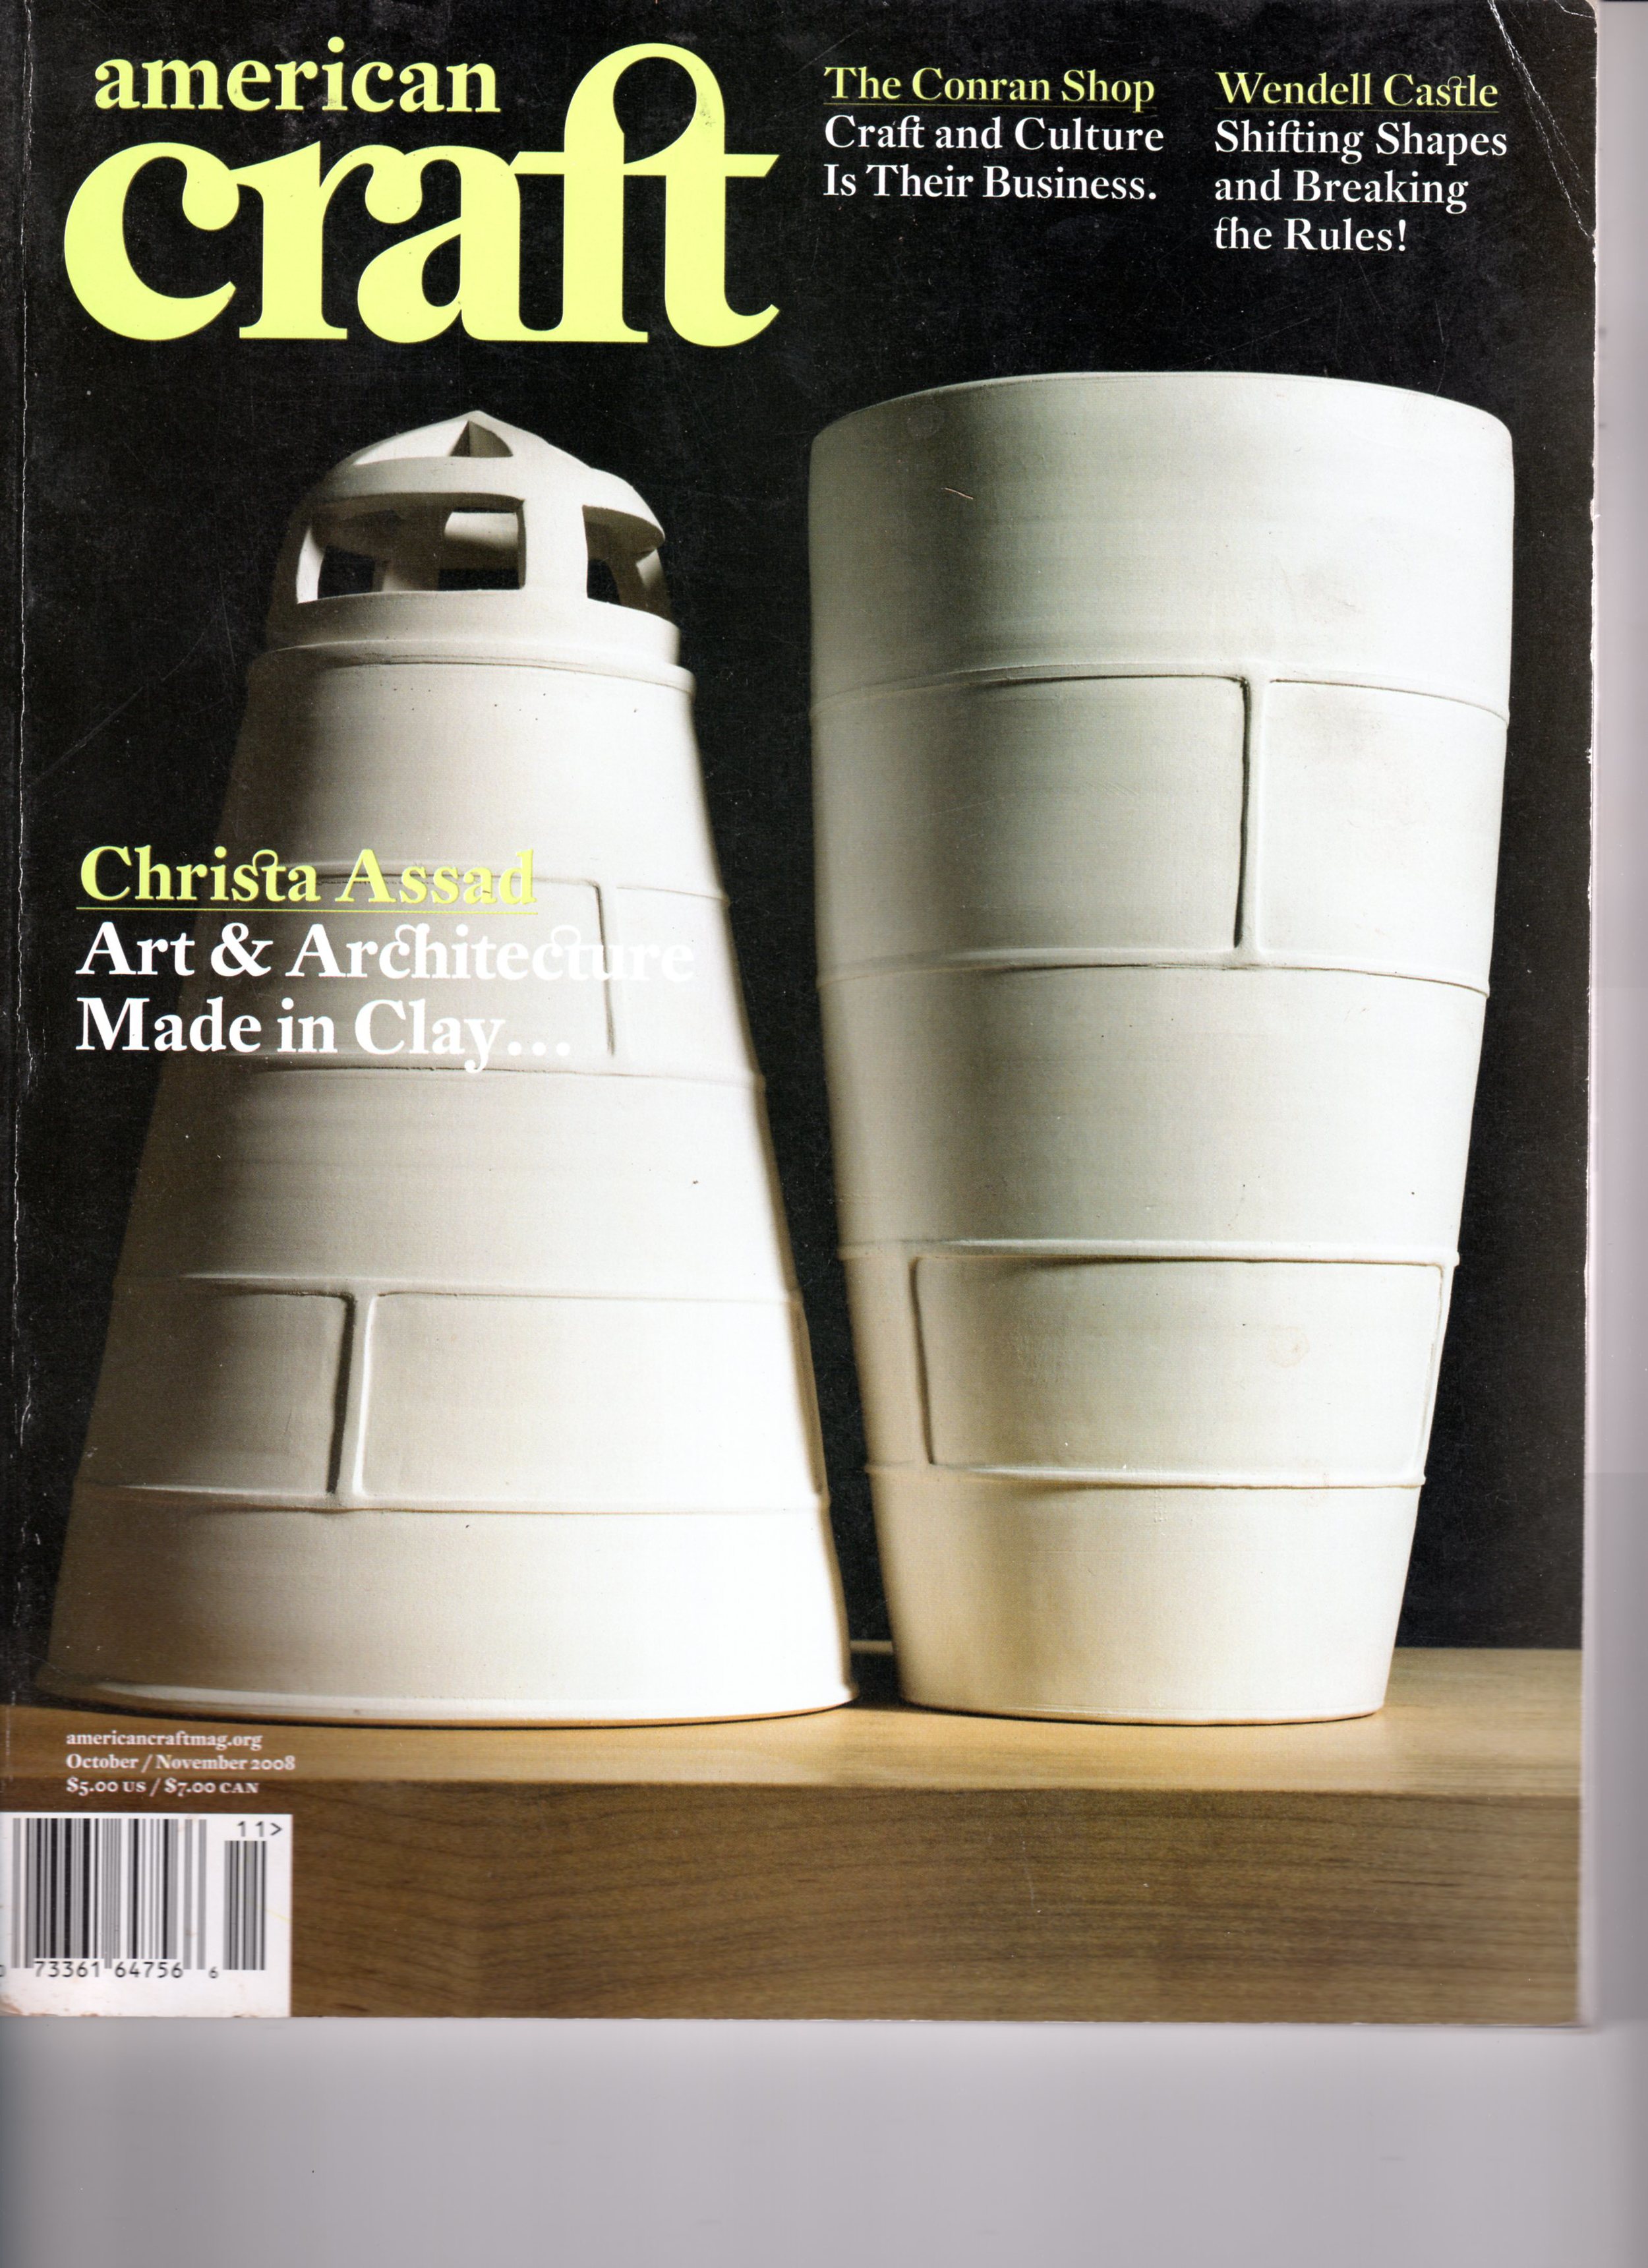 American Craft October 2008 cover.jpg